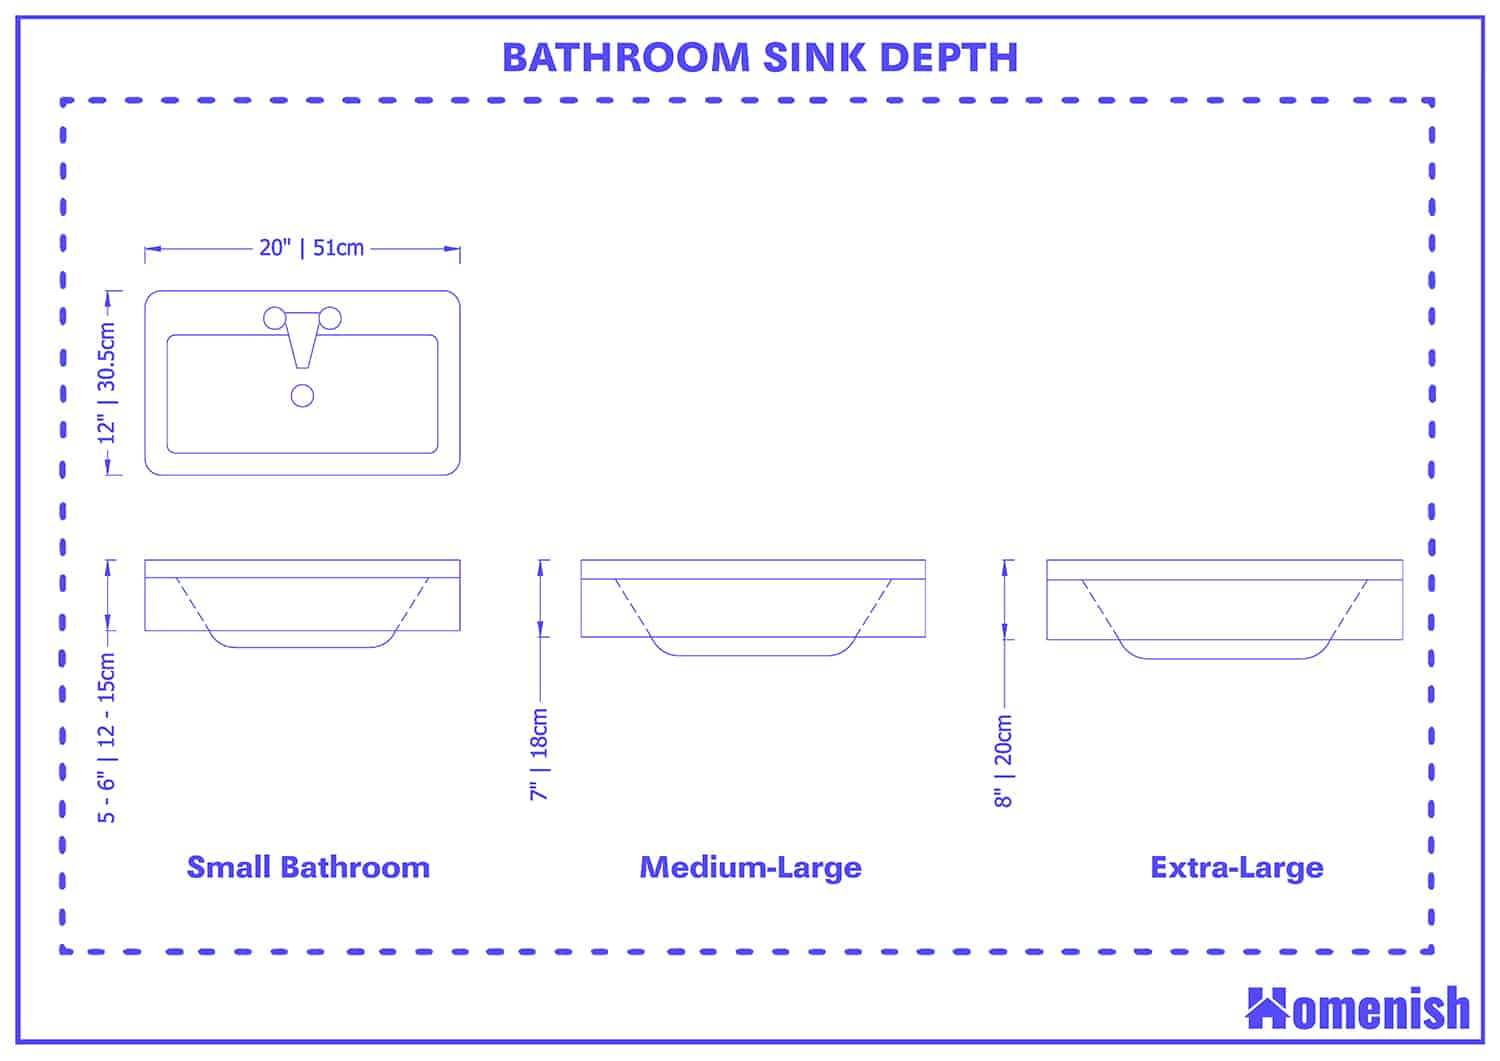 depth of bathroom sink